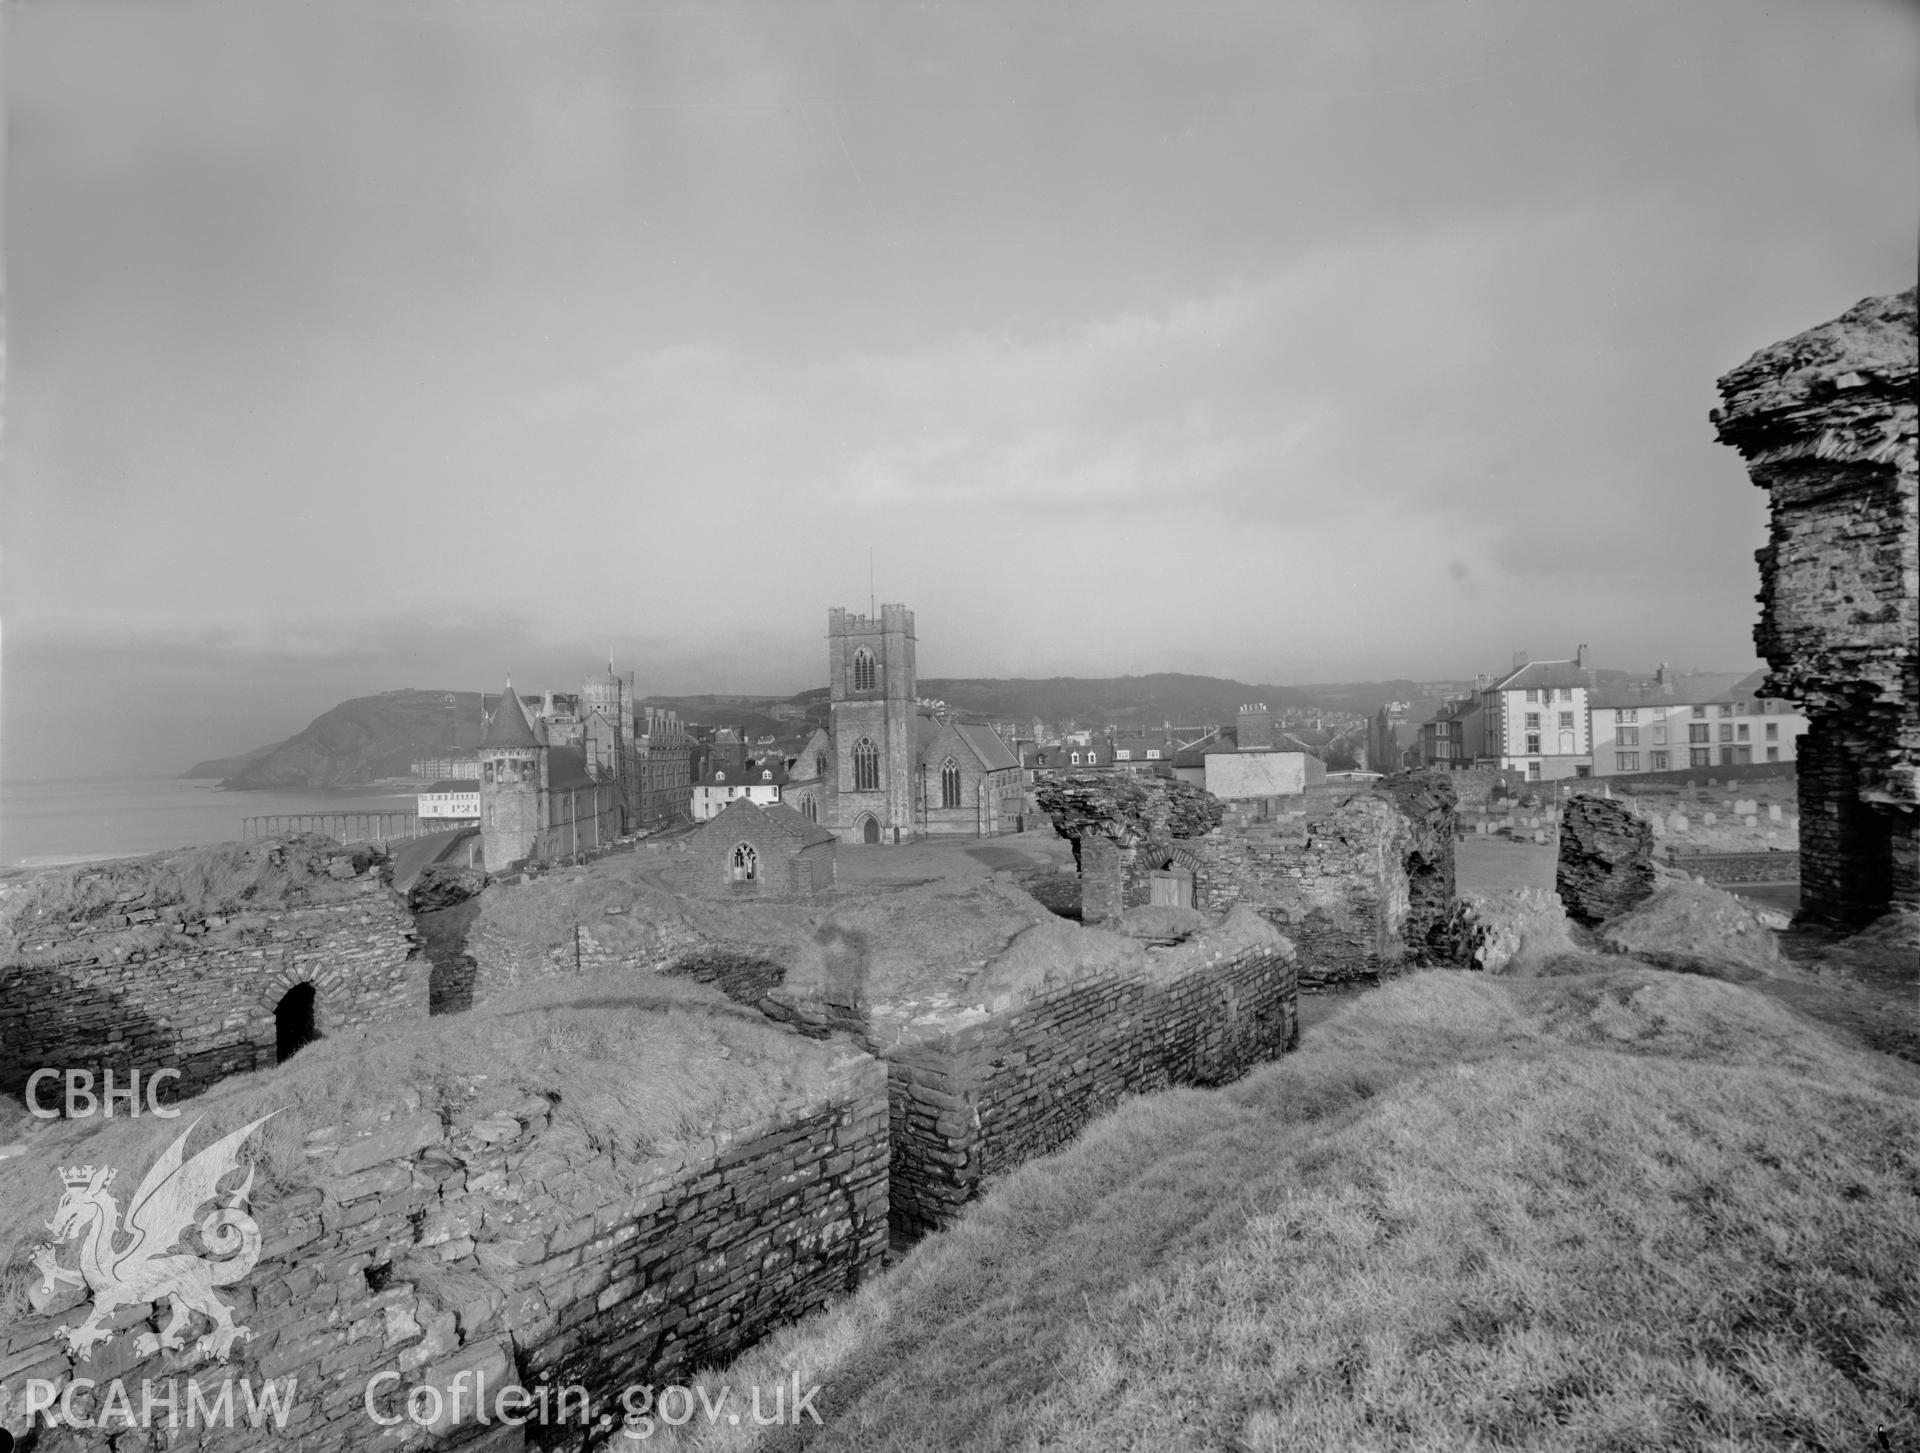 Landscape view of Aberystwyth Castle, taken 25.01.65.